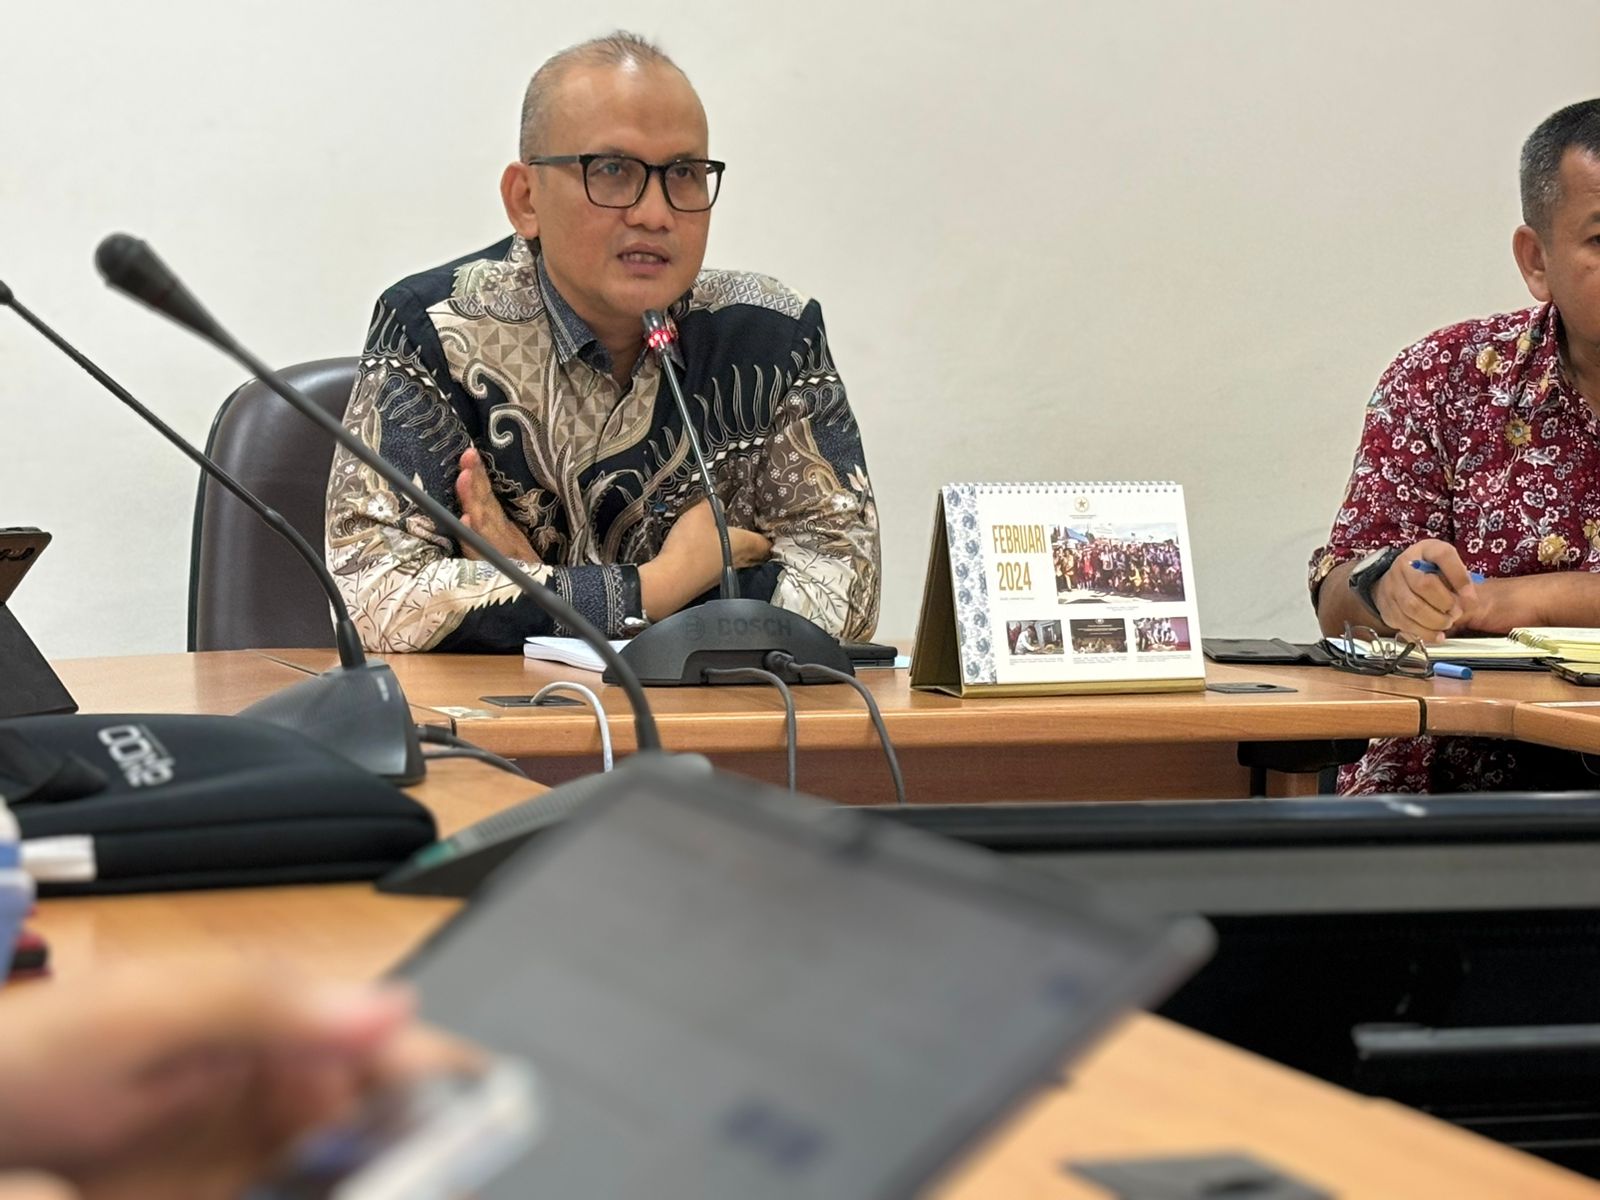 Merintis Memori Kolektif Bangsa Wakil Presiden Indonesia, Pusdipres ANRI Berkoordinasi dengan Setwapres RI